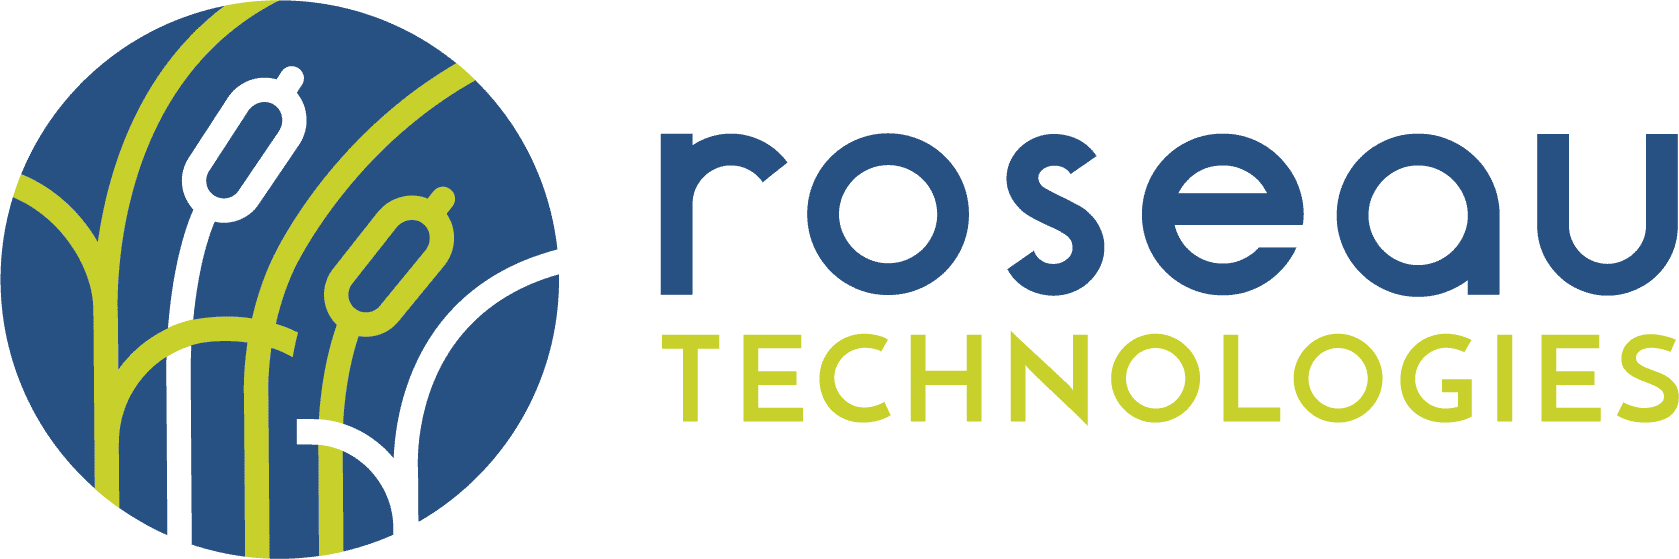 ROSEAU TECHNOLOGIES (copie)